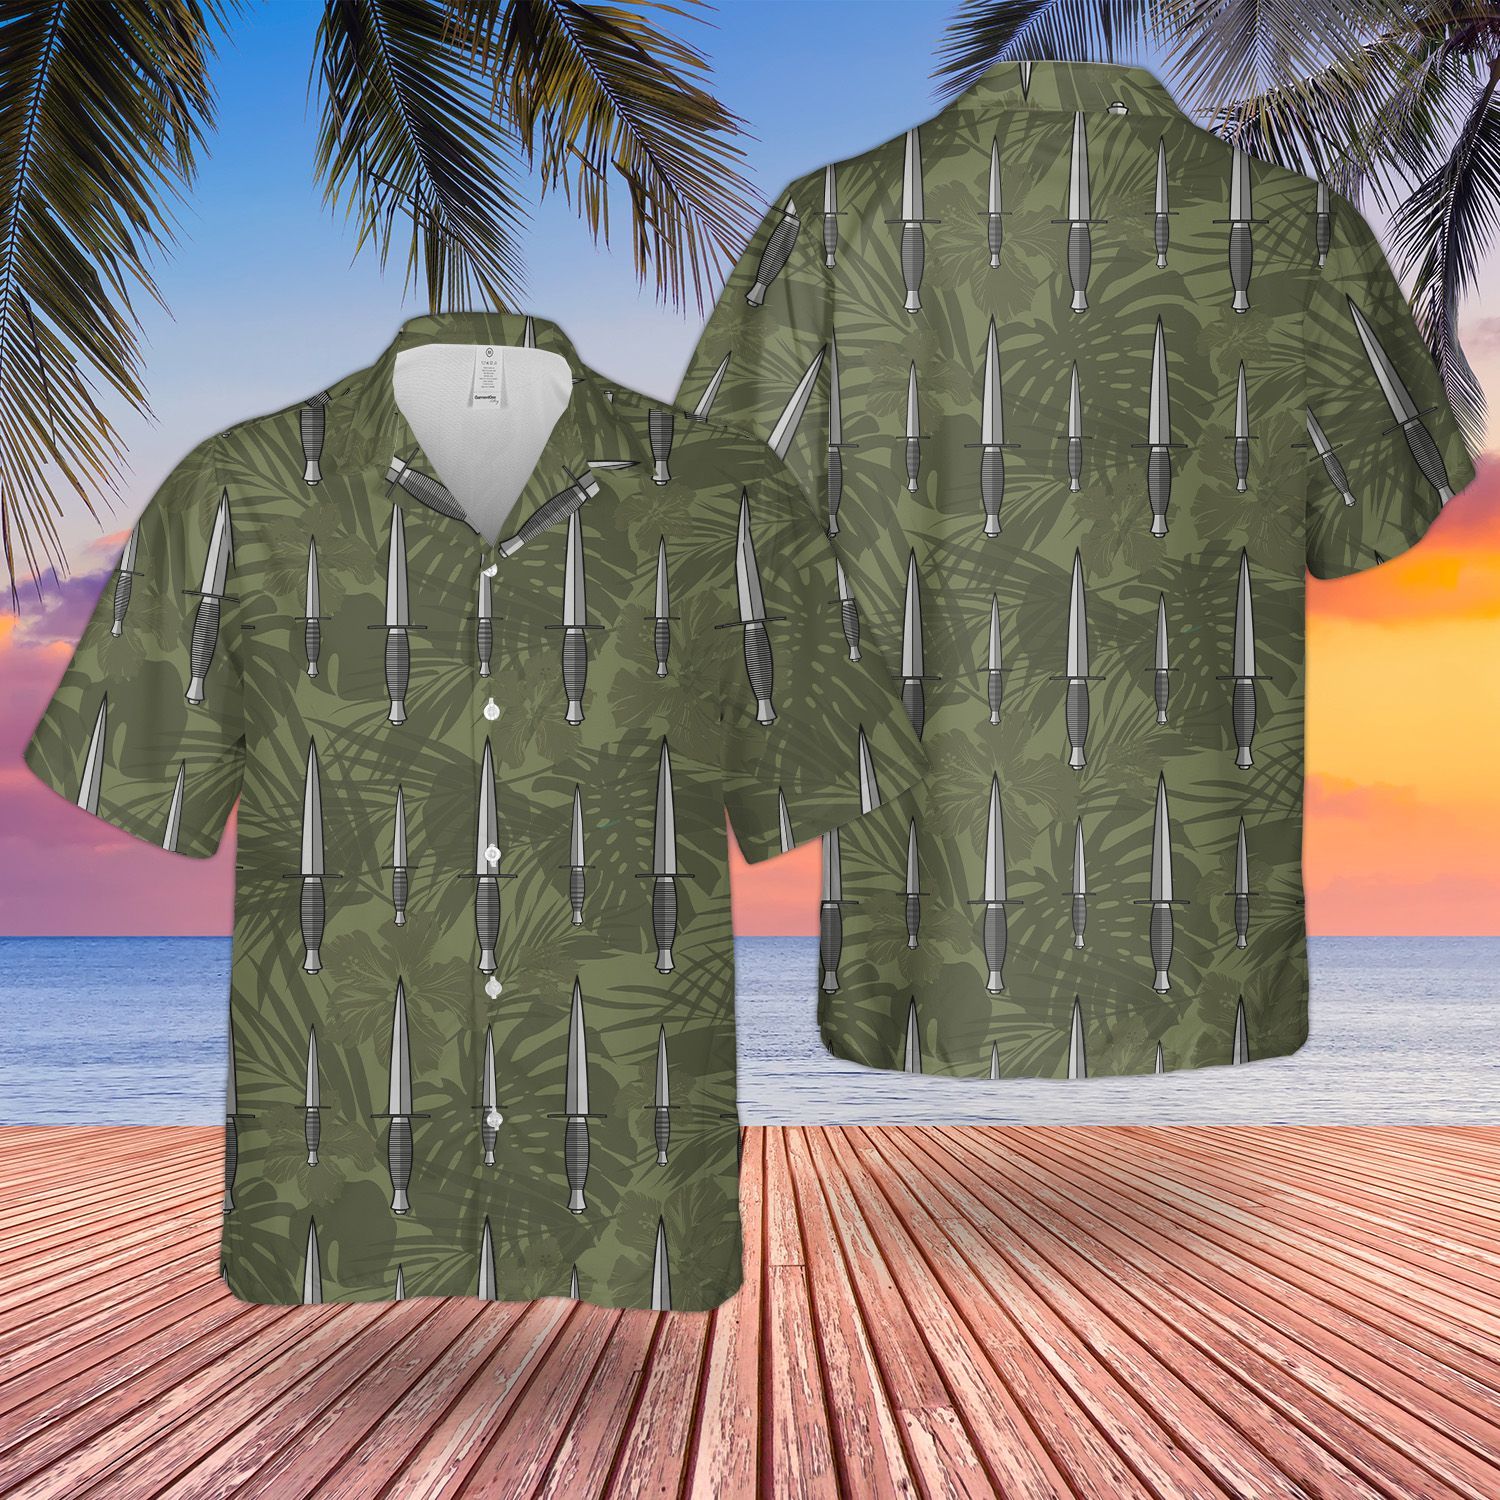 Enjoy your summer with top cool hawaiian shirt below 185